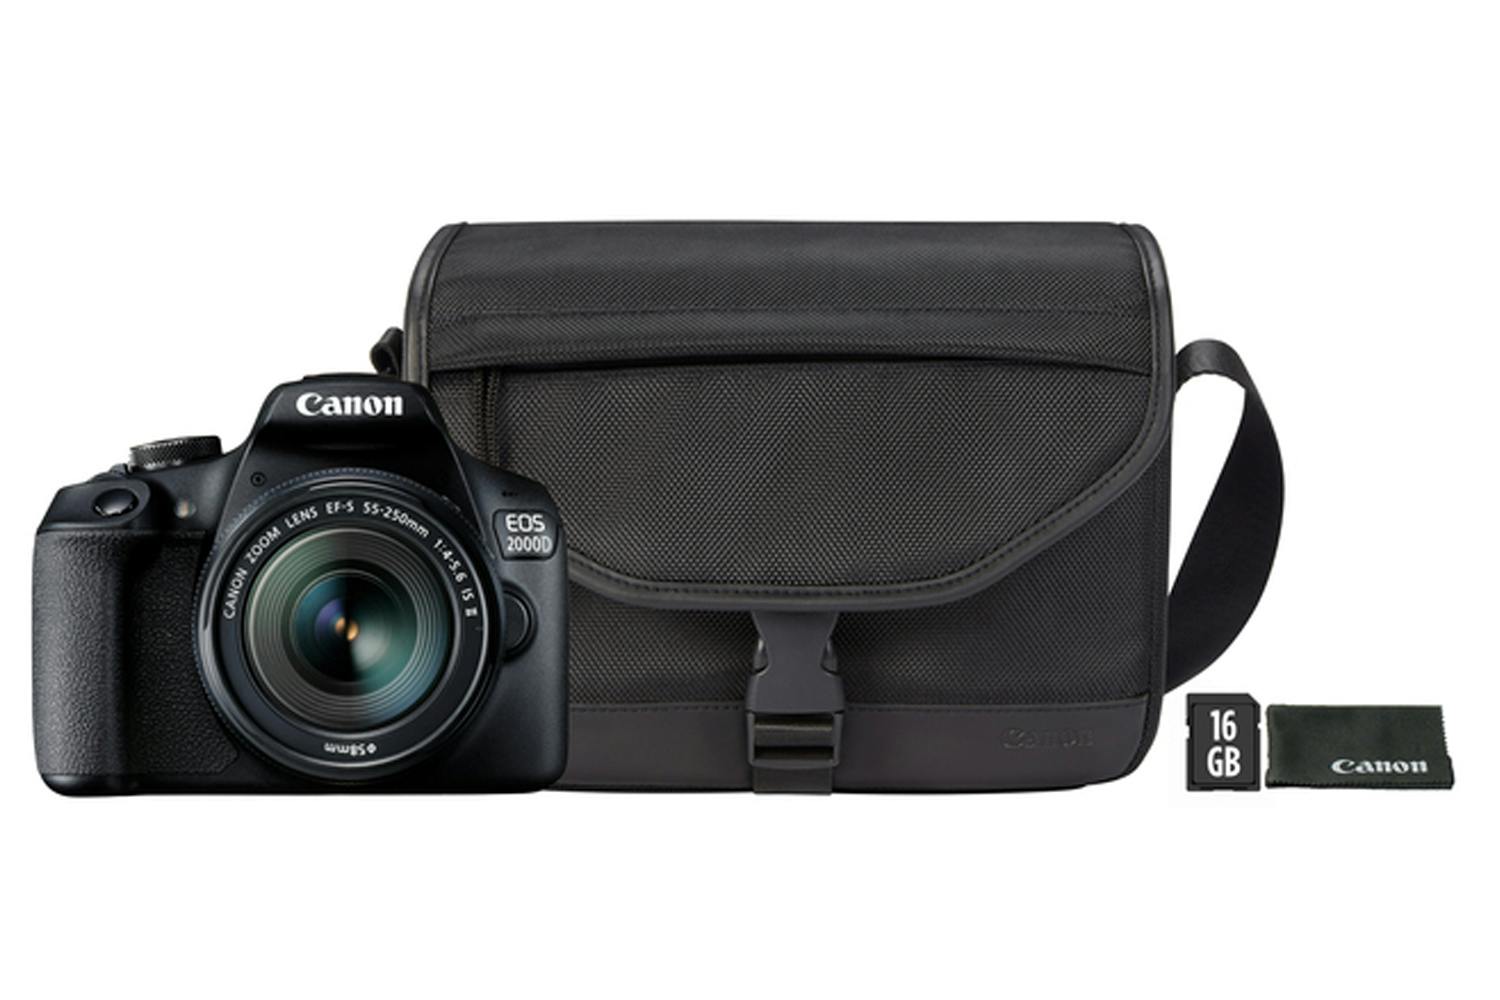 Canon EOS 2000D 18-55mm + Bag + 16GB